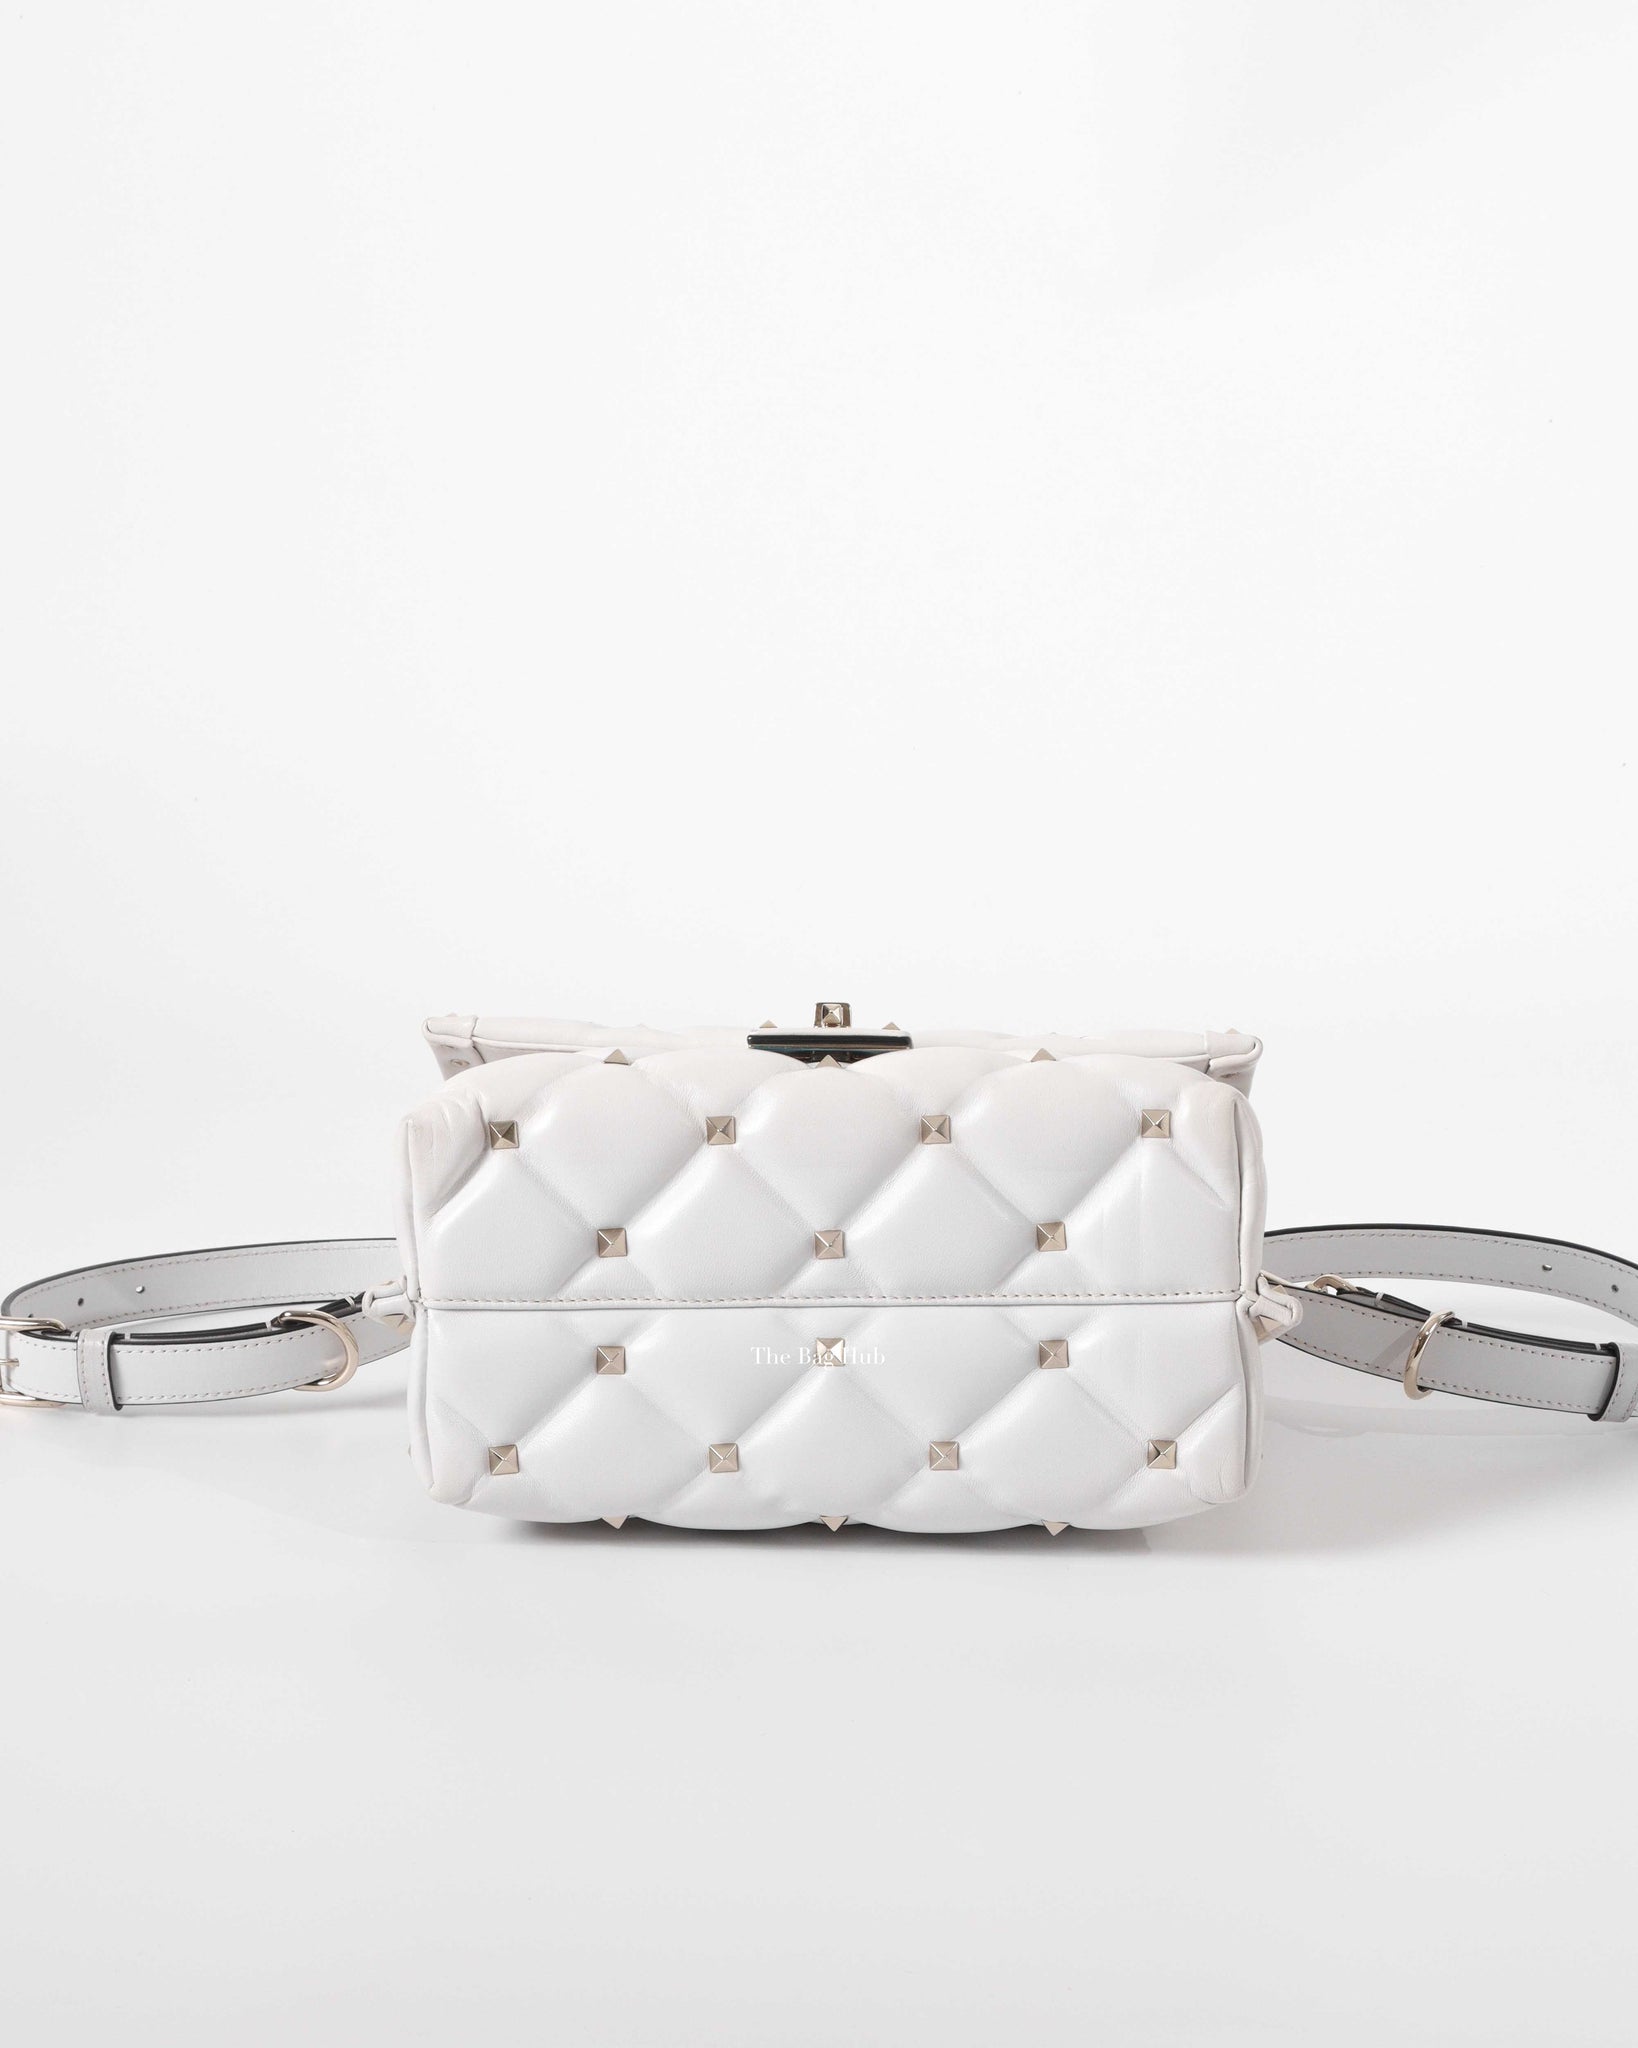 Valentino Garavani White VLTN Print Candystud Top Handle Bag